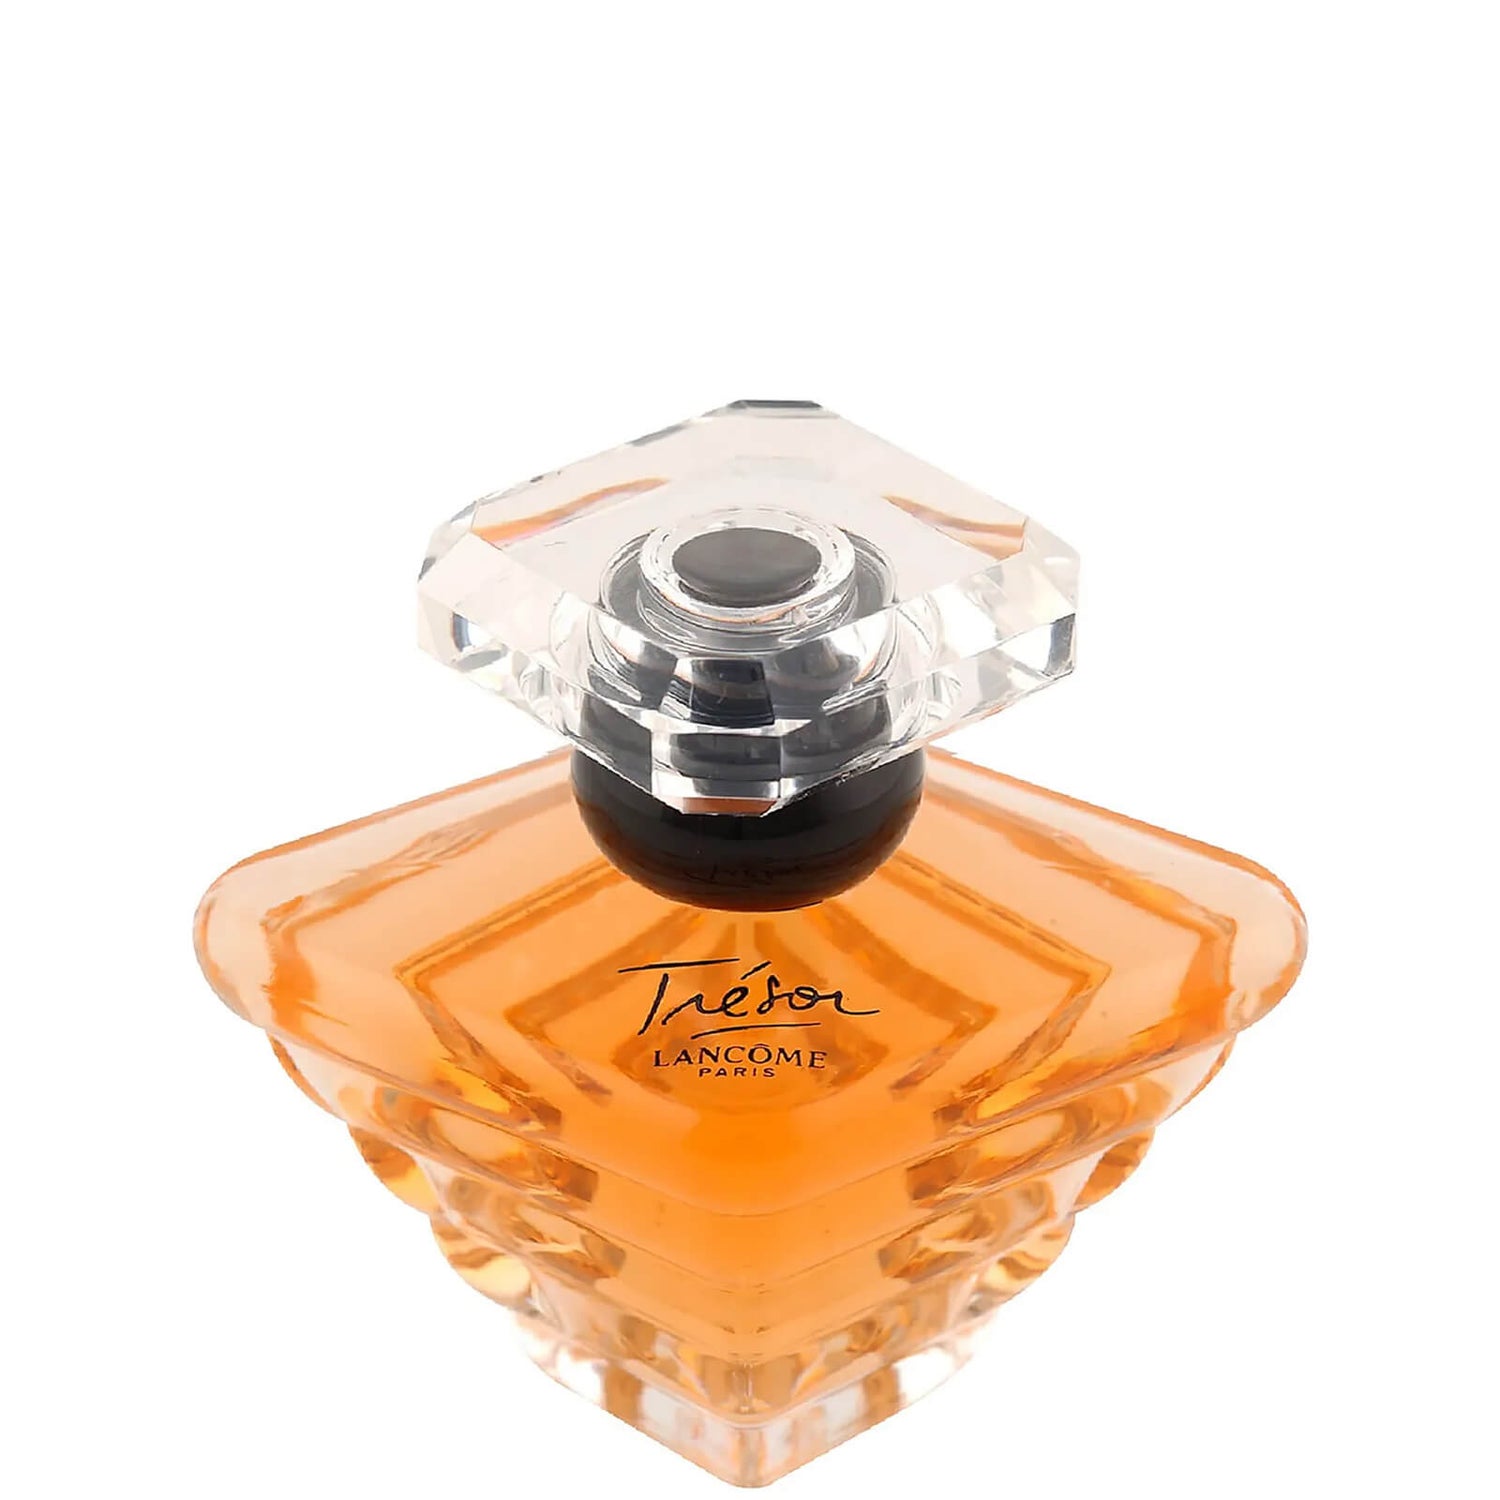 Lancôme Trésor Eau de Parfum 30ml Lancôme Trésor parfémovaná voda 30 ml